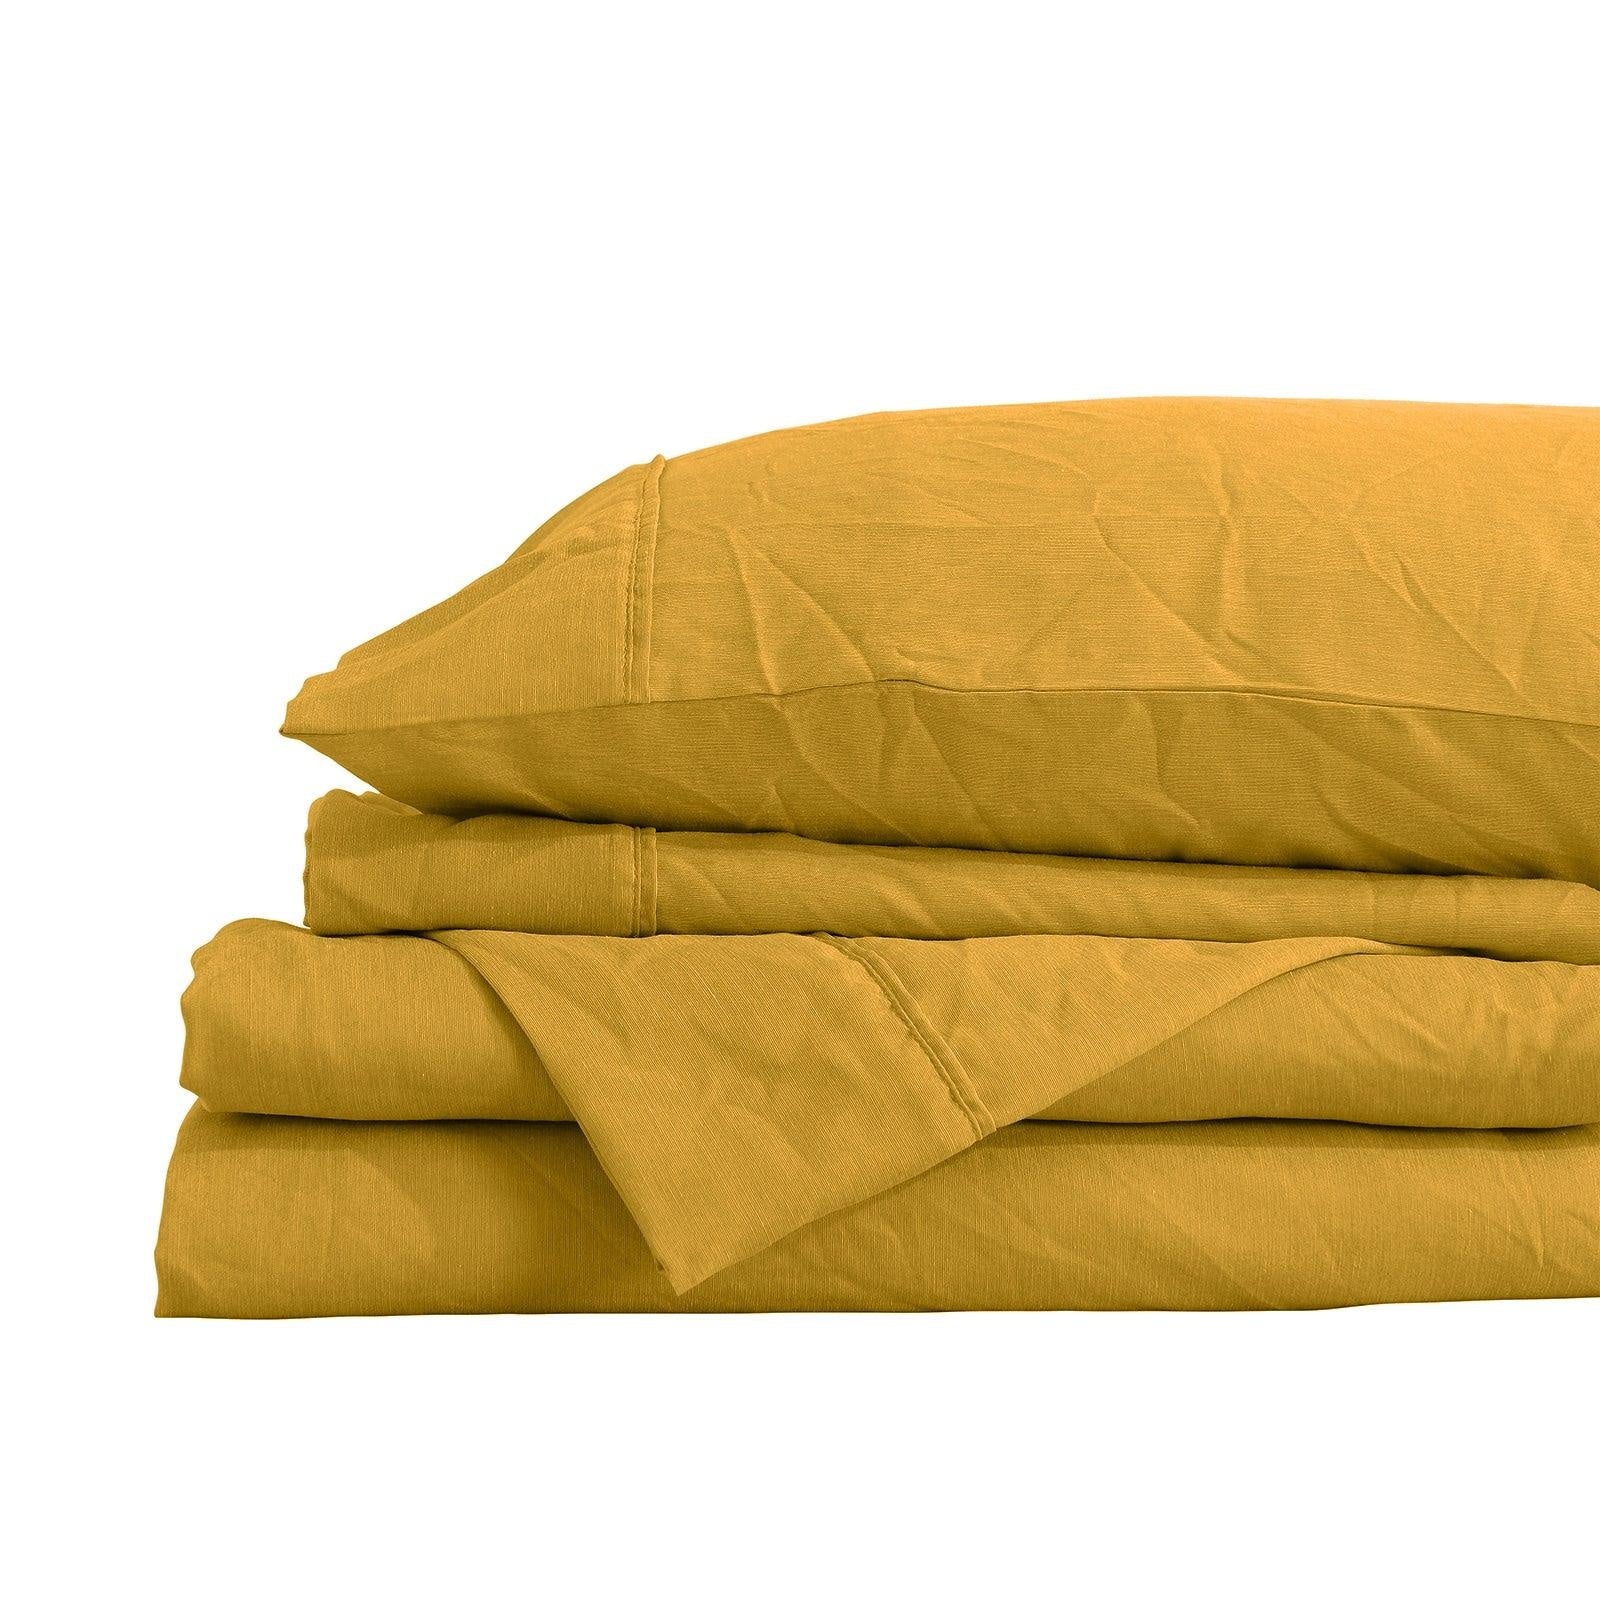 Royal Comfort Flax Linen Blend Sheet Set Bedding Luxury Breathable Ultra Soft Mustard Gold King Deals499